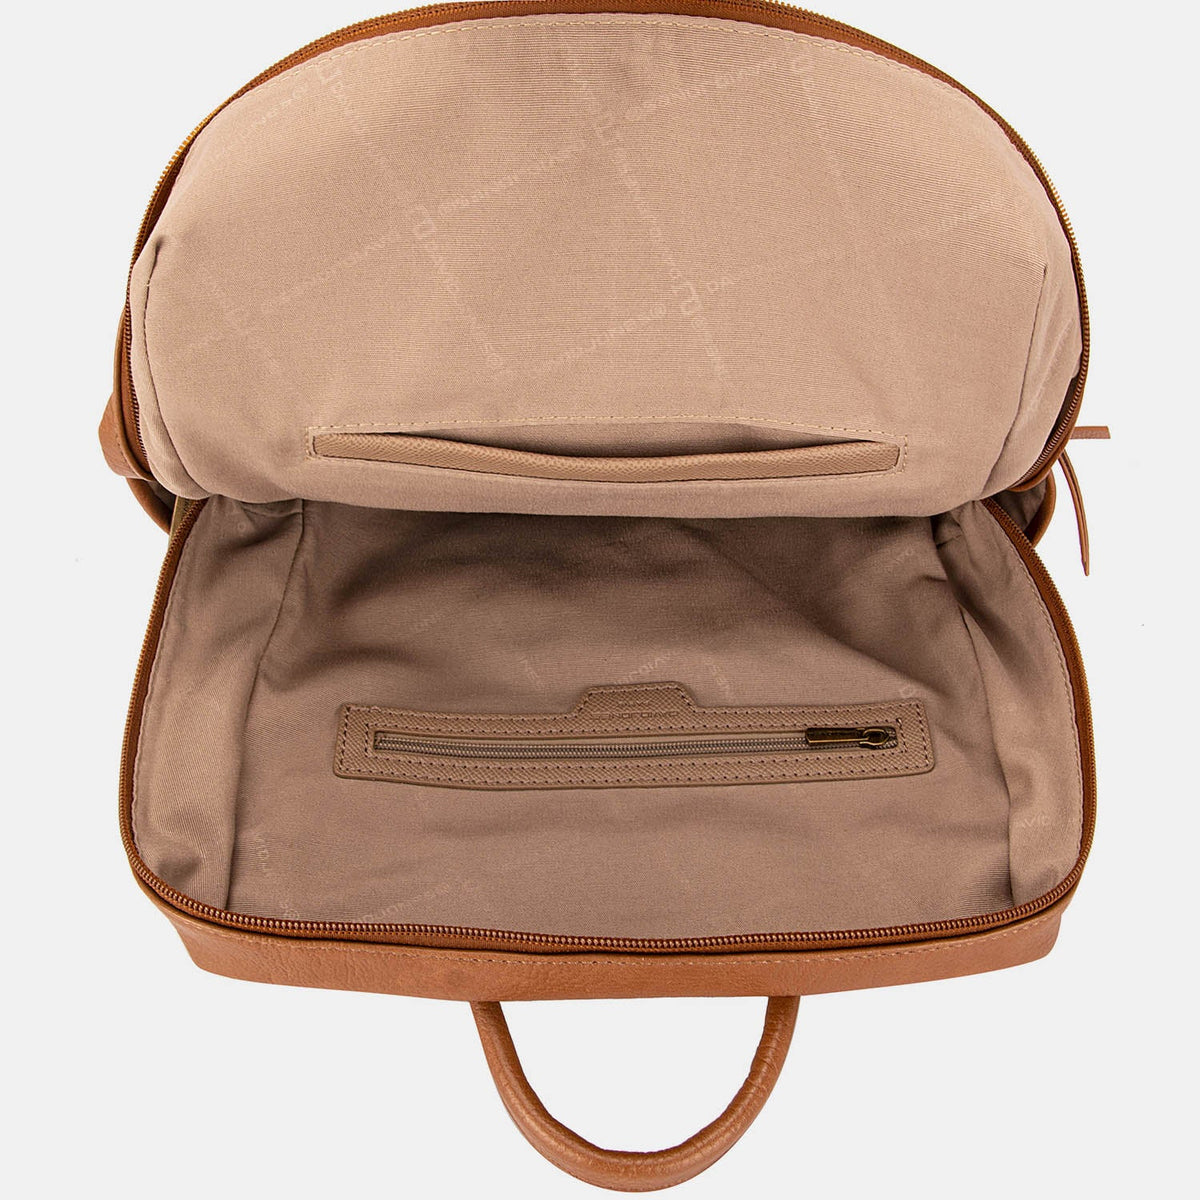 David Jones PU Leather Backpack Bag - Happily Ever Atchison Shop Co.